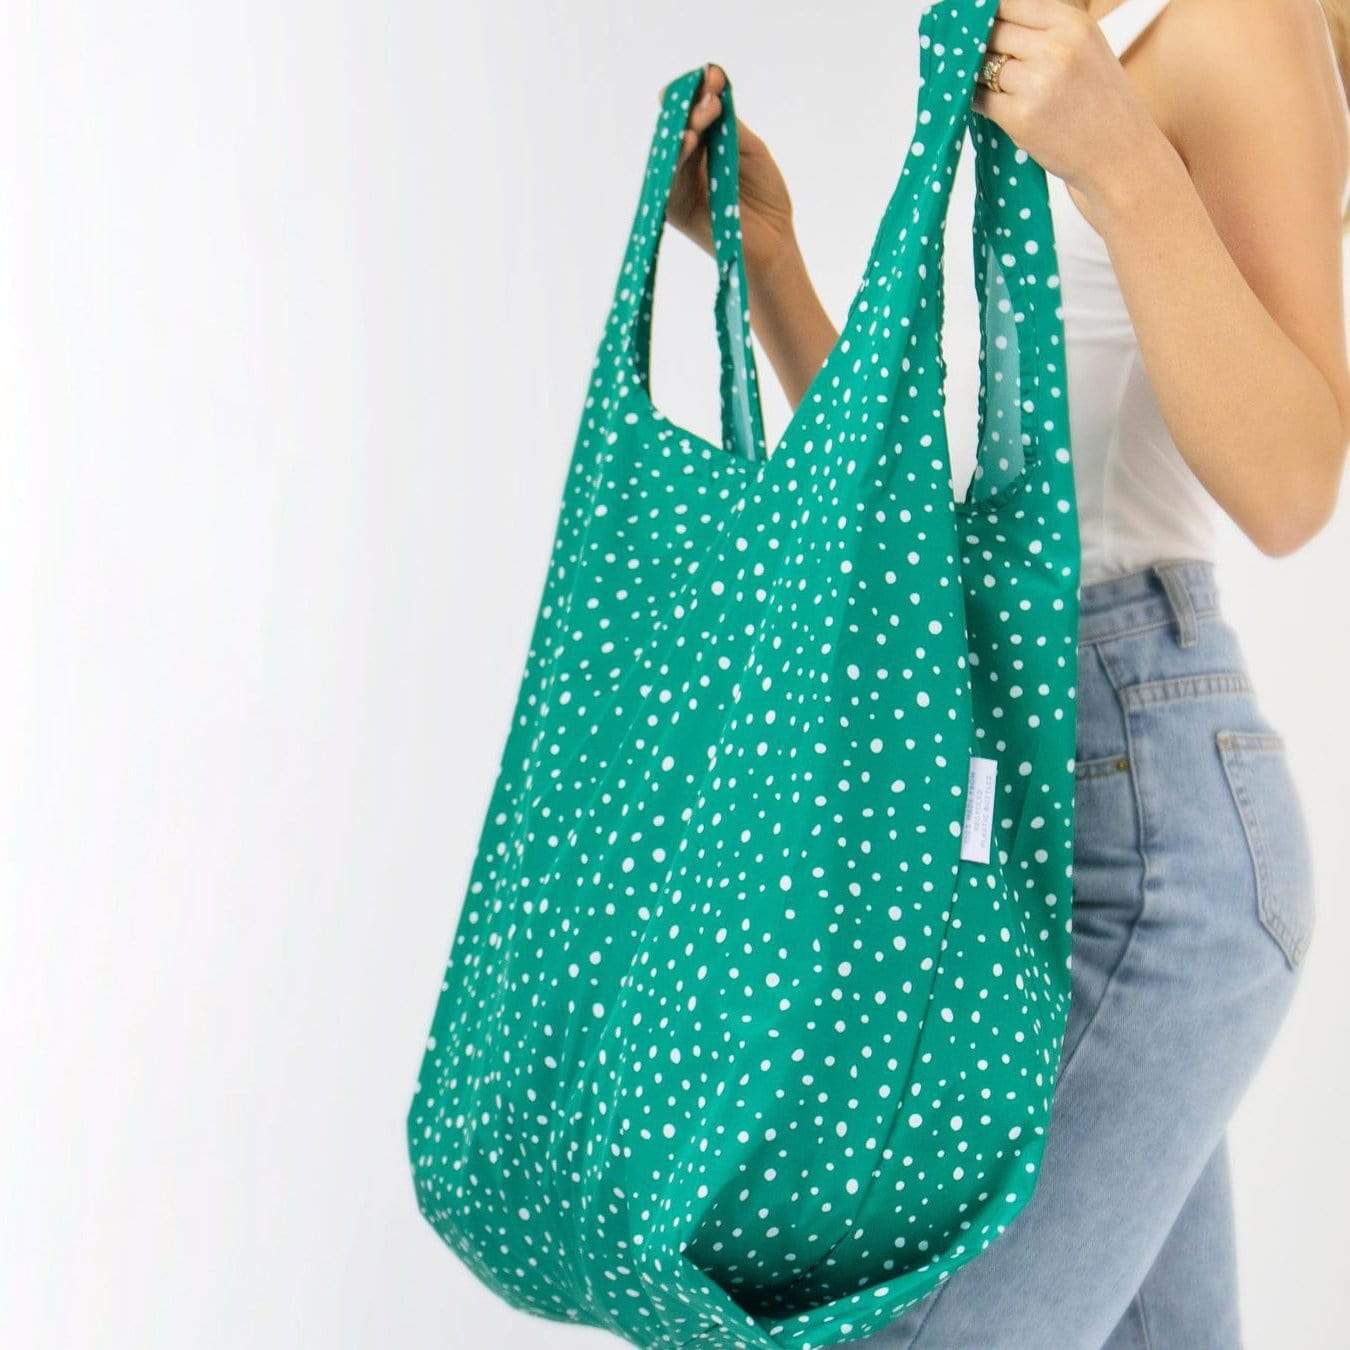 Kind Bag Shopping Totes Green Polkadots Kind Bag Reusable Shopping Bag - Extra Large - Made from 12 Plastic Bottles (100% rPET)